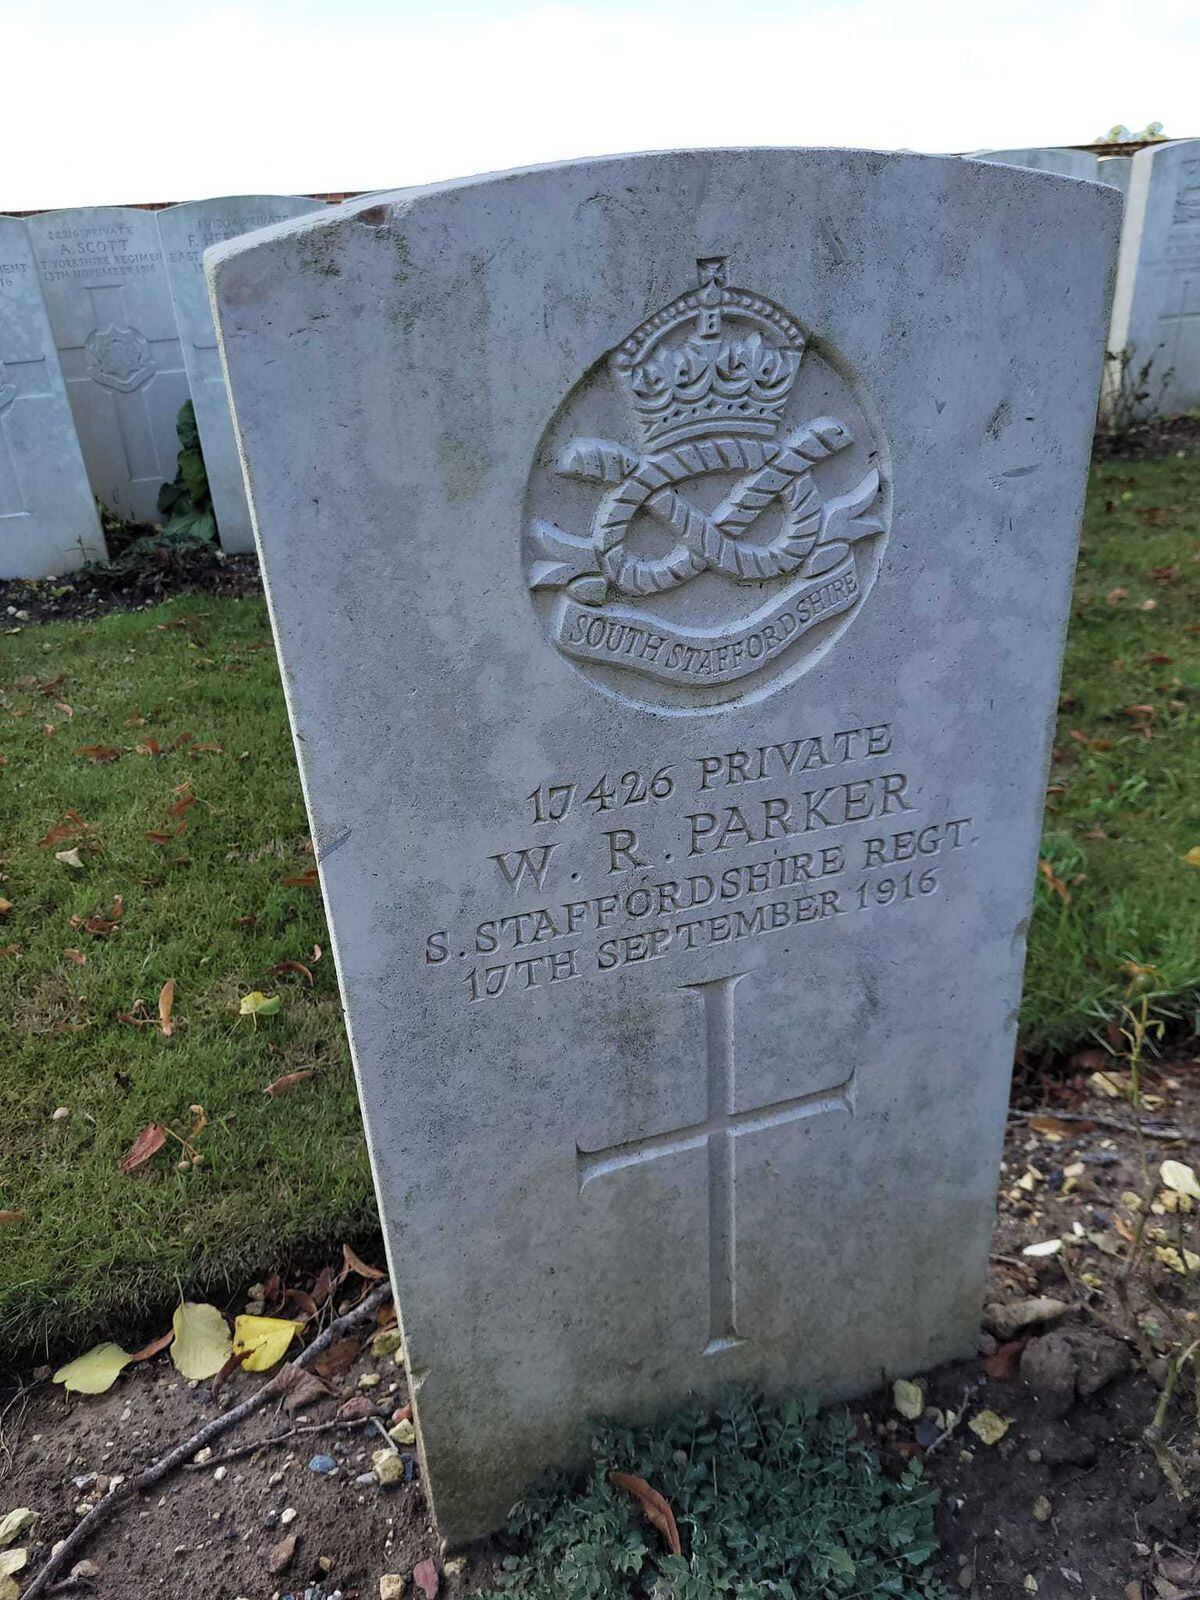 William Robert Parker's grave in France